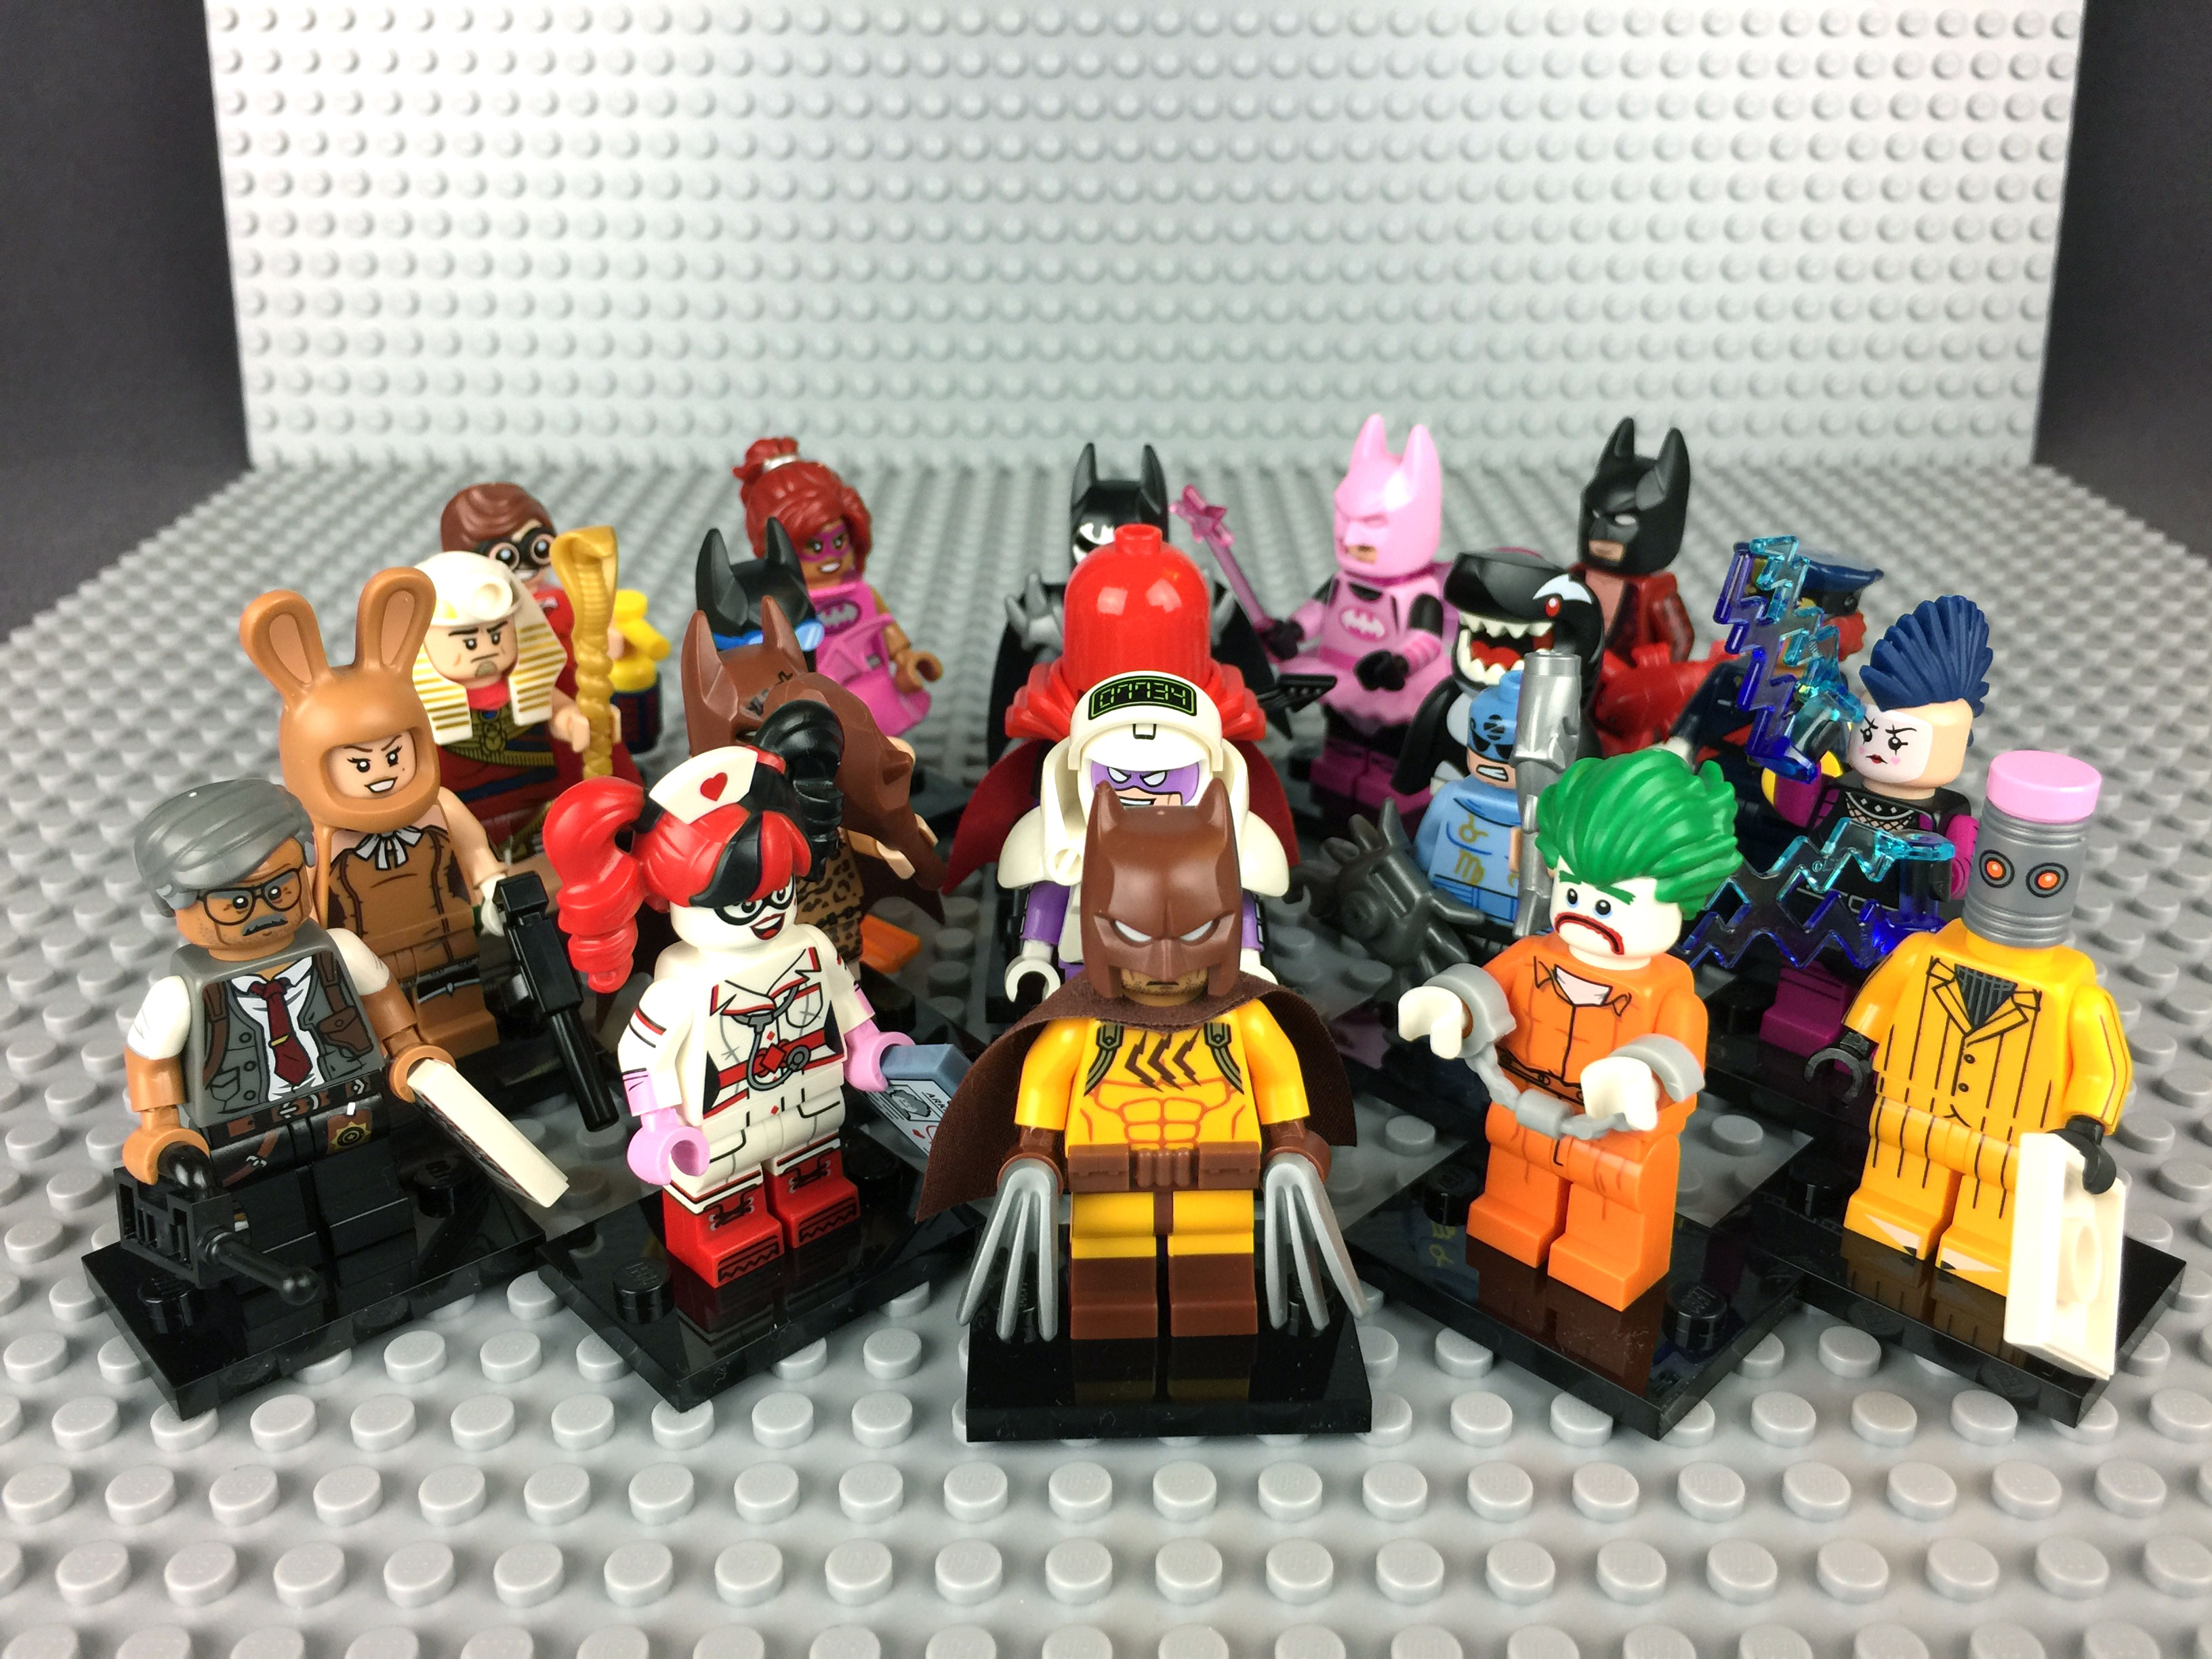 Batman Lego Minifigure Stock Photo - Download Image Now